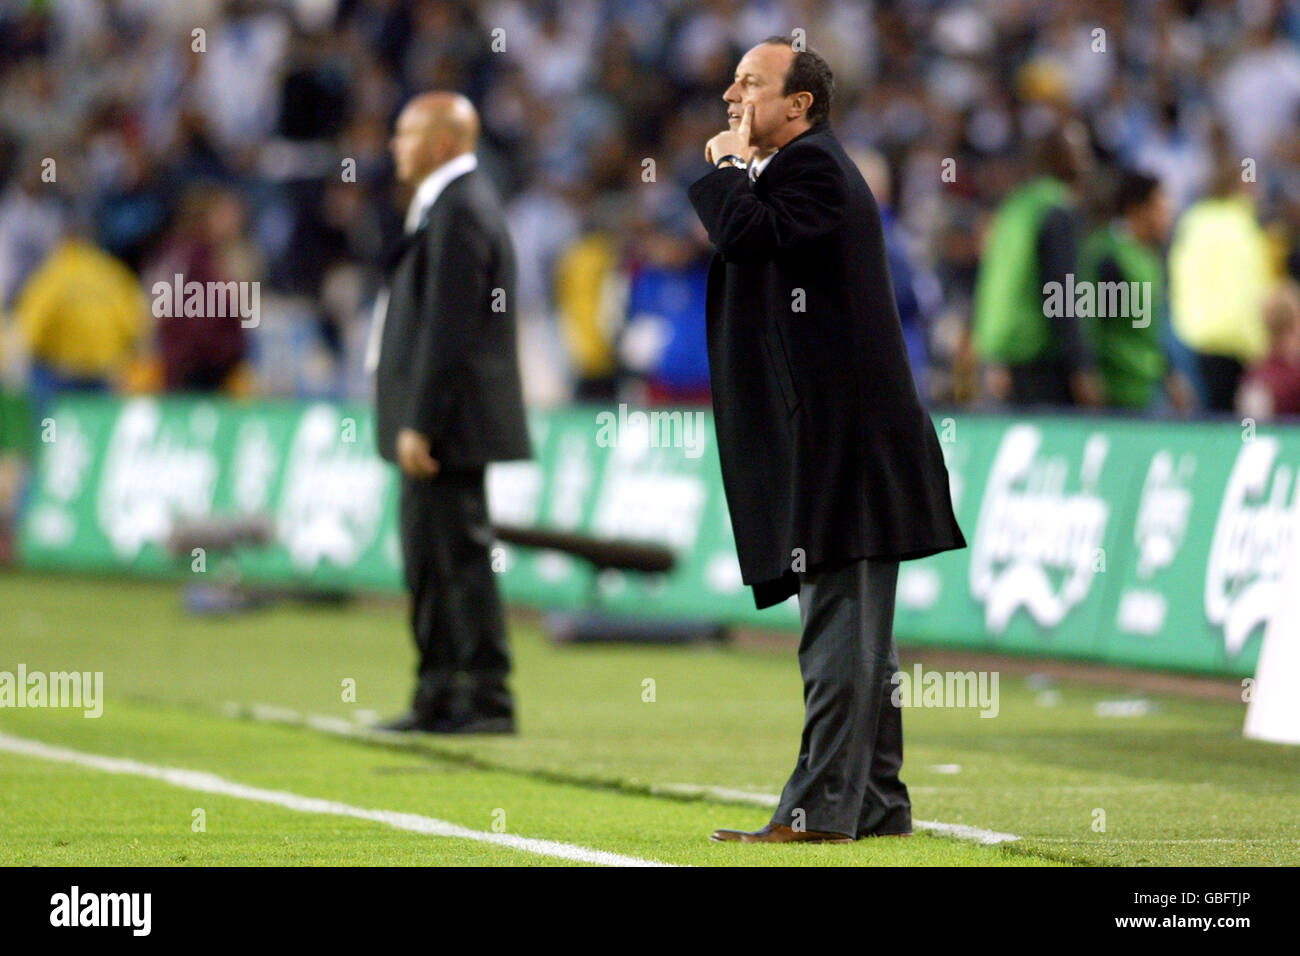 Valencia's coach Rafael Benitez (r) with Olympique Marseille's coach Jose Anigo in the background Stock Photo